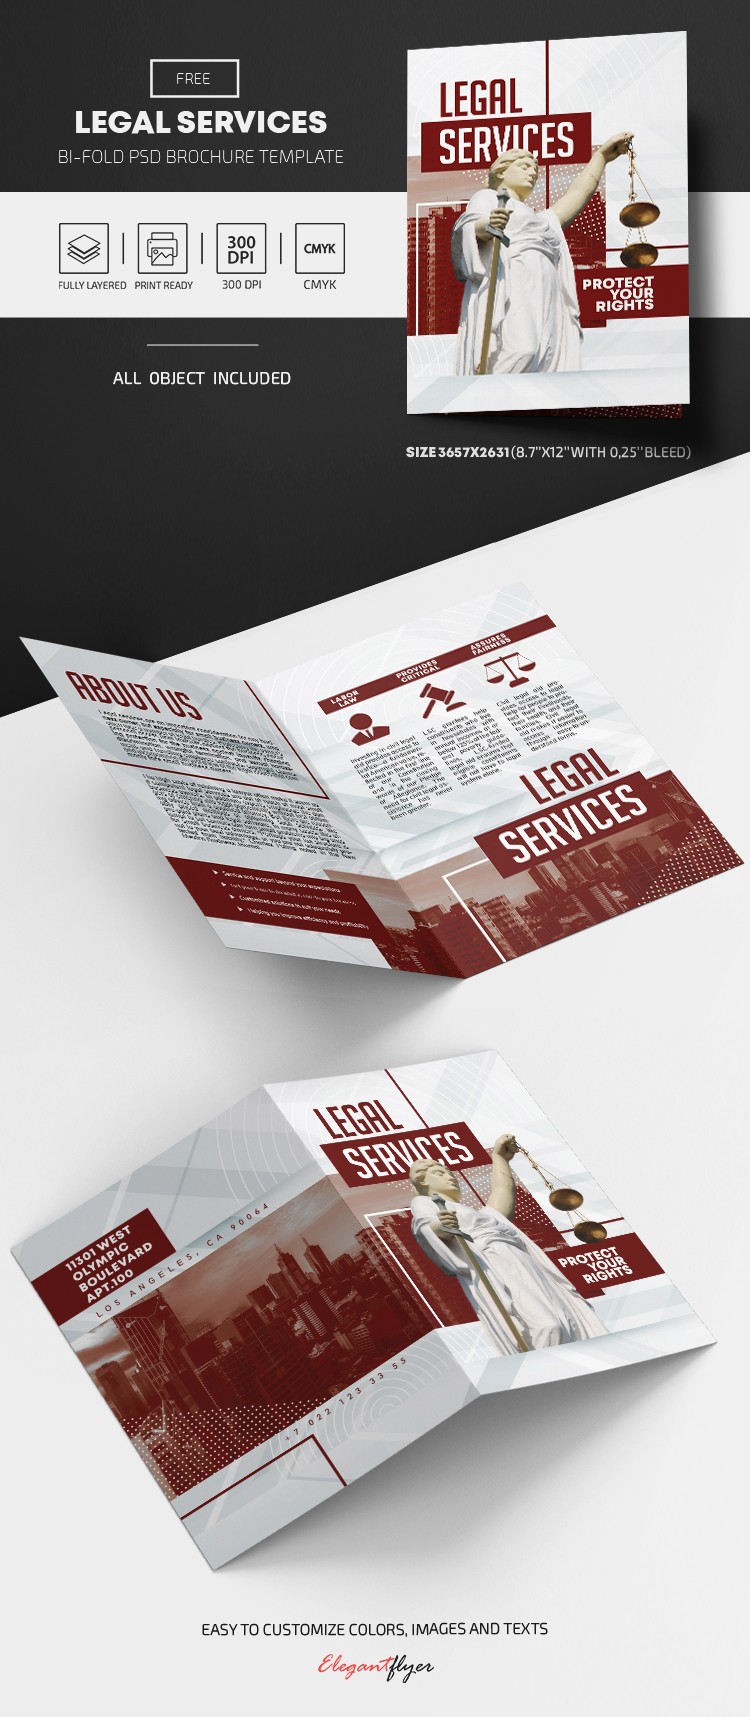 Legal Services Bi-fold Brochure by ElegantFlyer